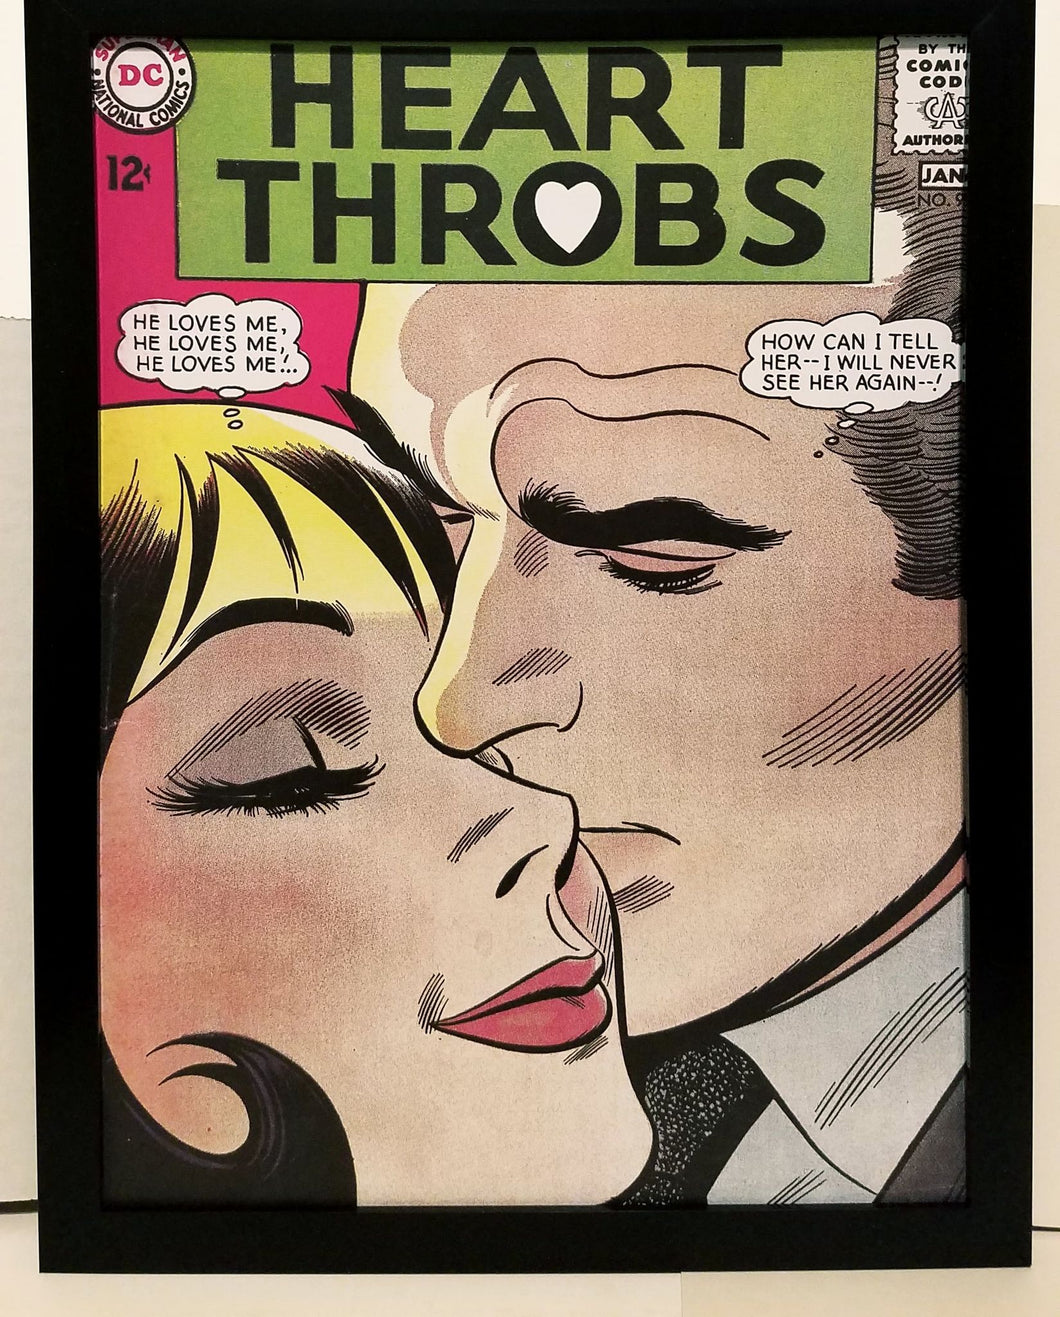 Heart Throbs #93 by John Romita 9x12 FRAMED Vintage 1964 DC Comics Art Print Poster